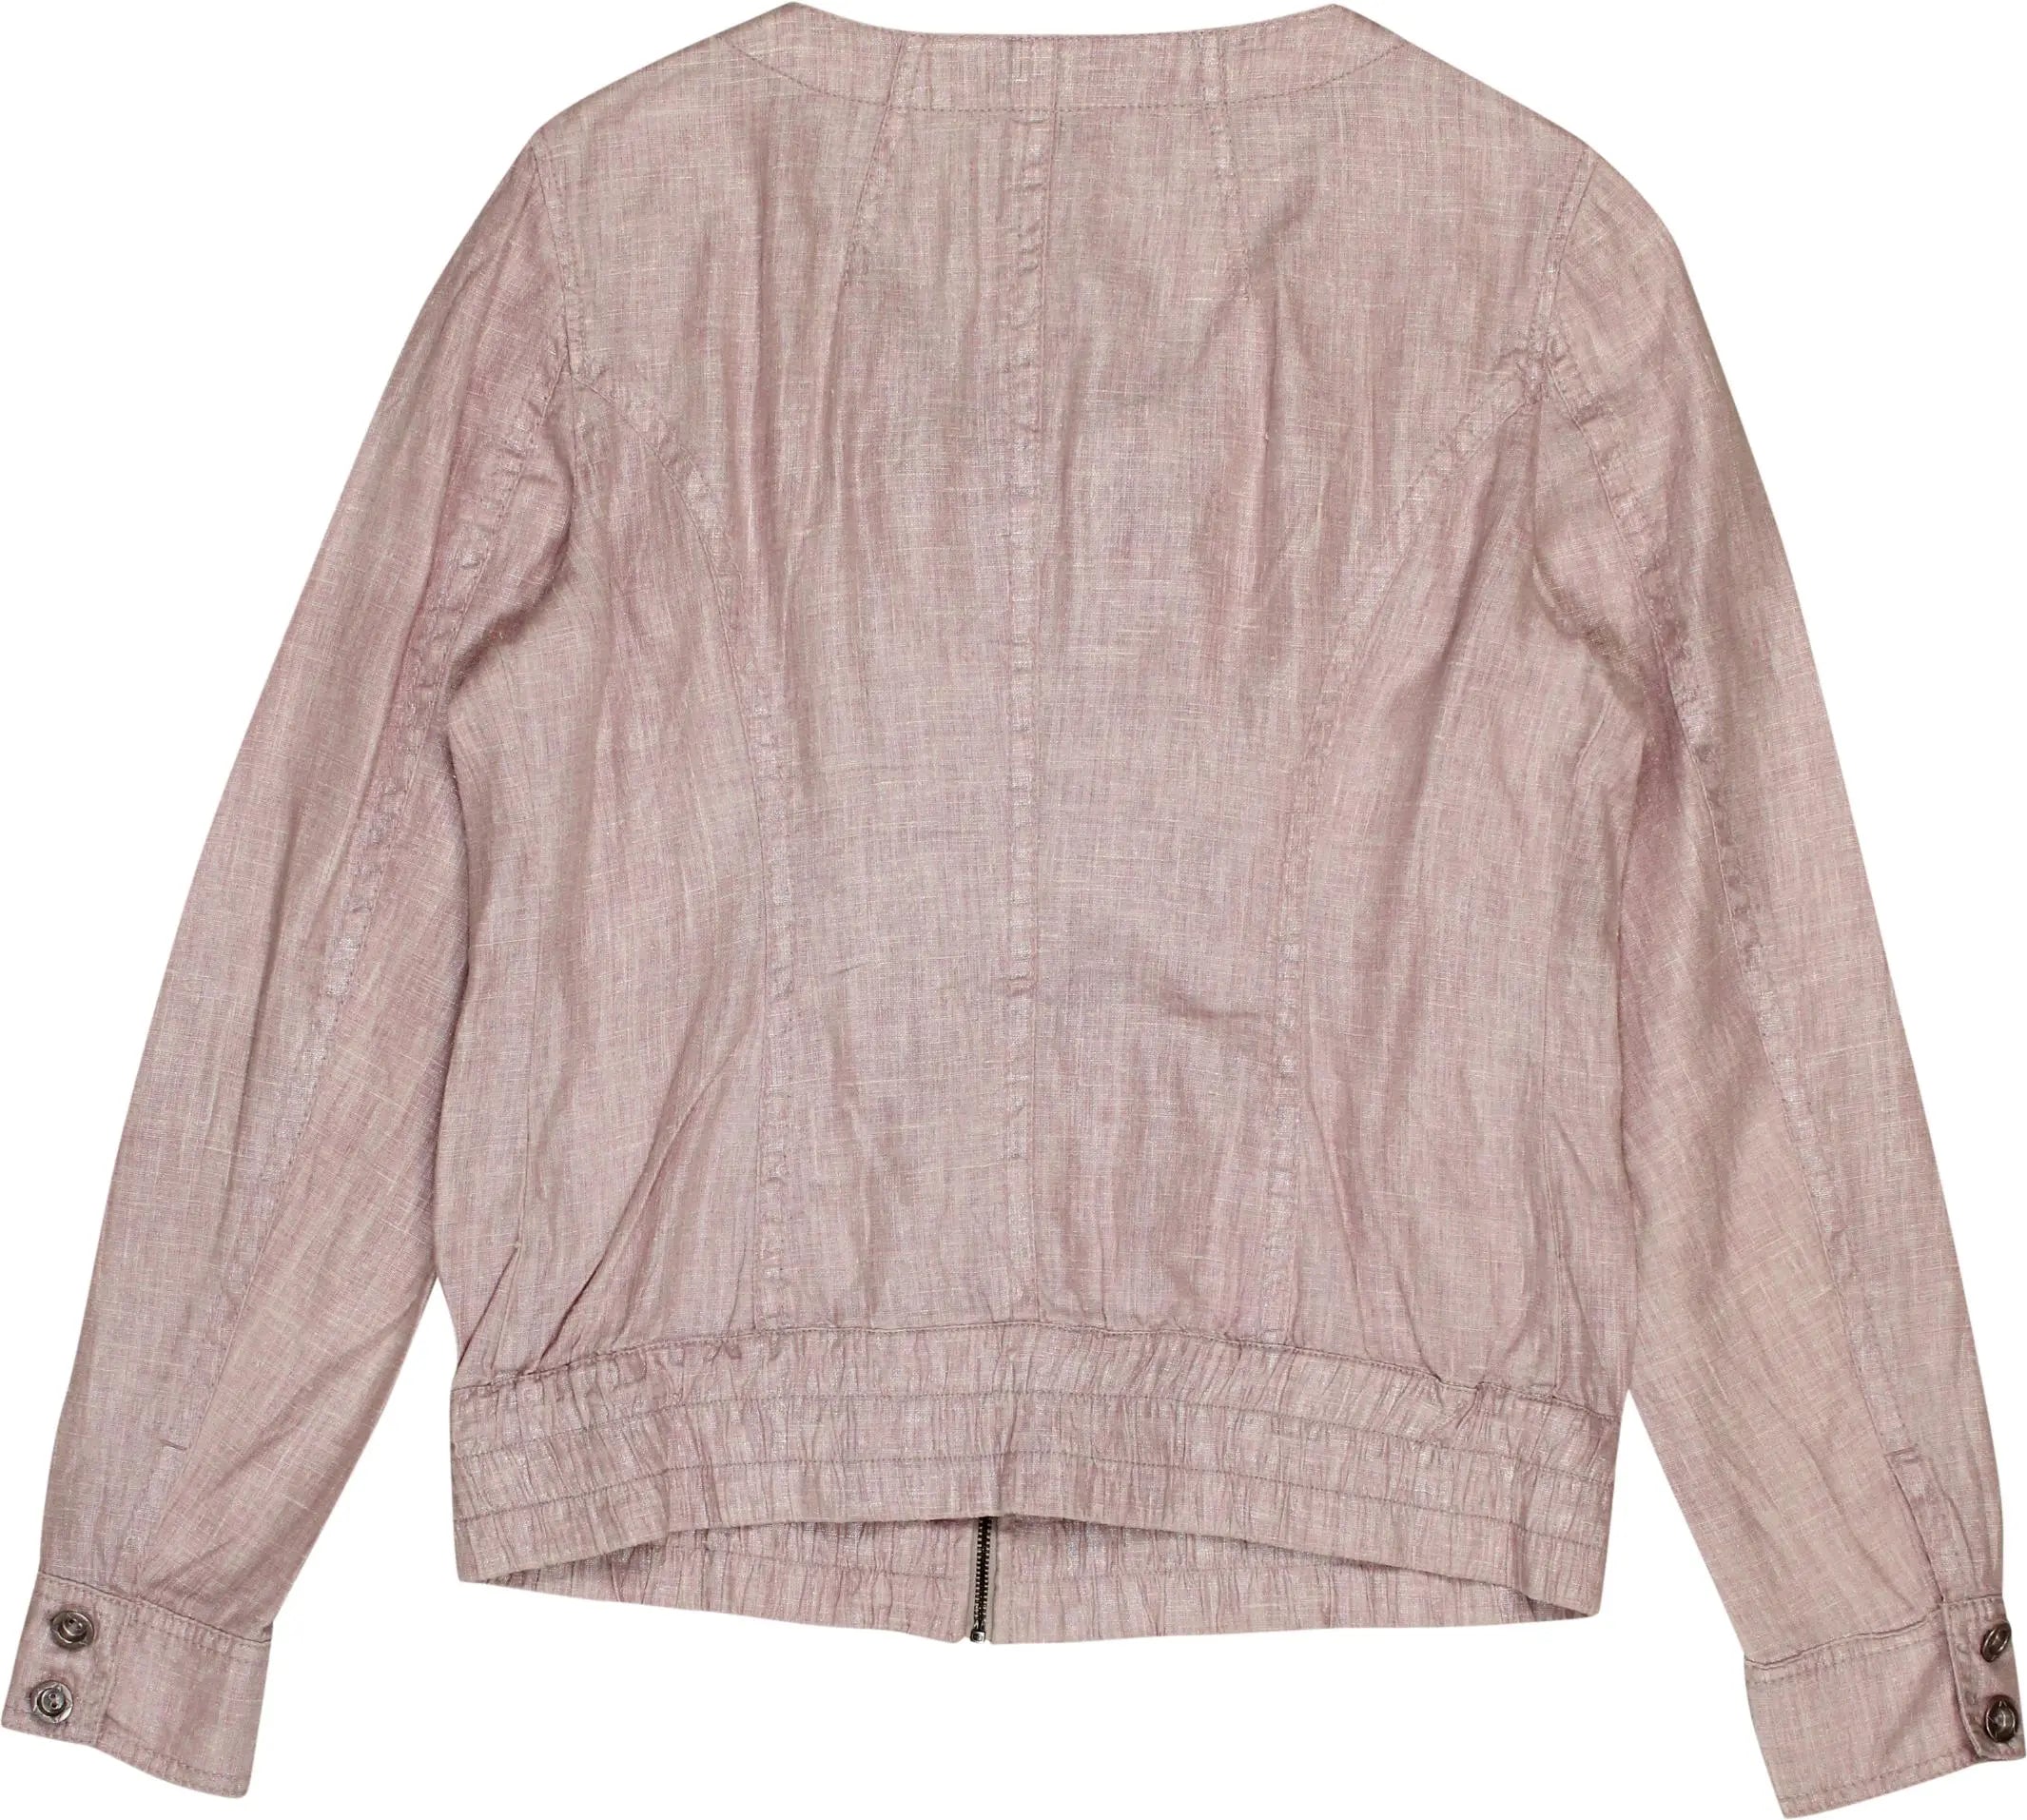 Bandolera - Pink Shimmer Jacket- ThriftTale.com - Vintage and second handclothing